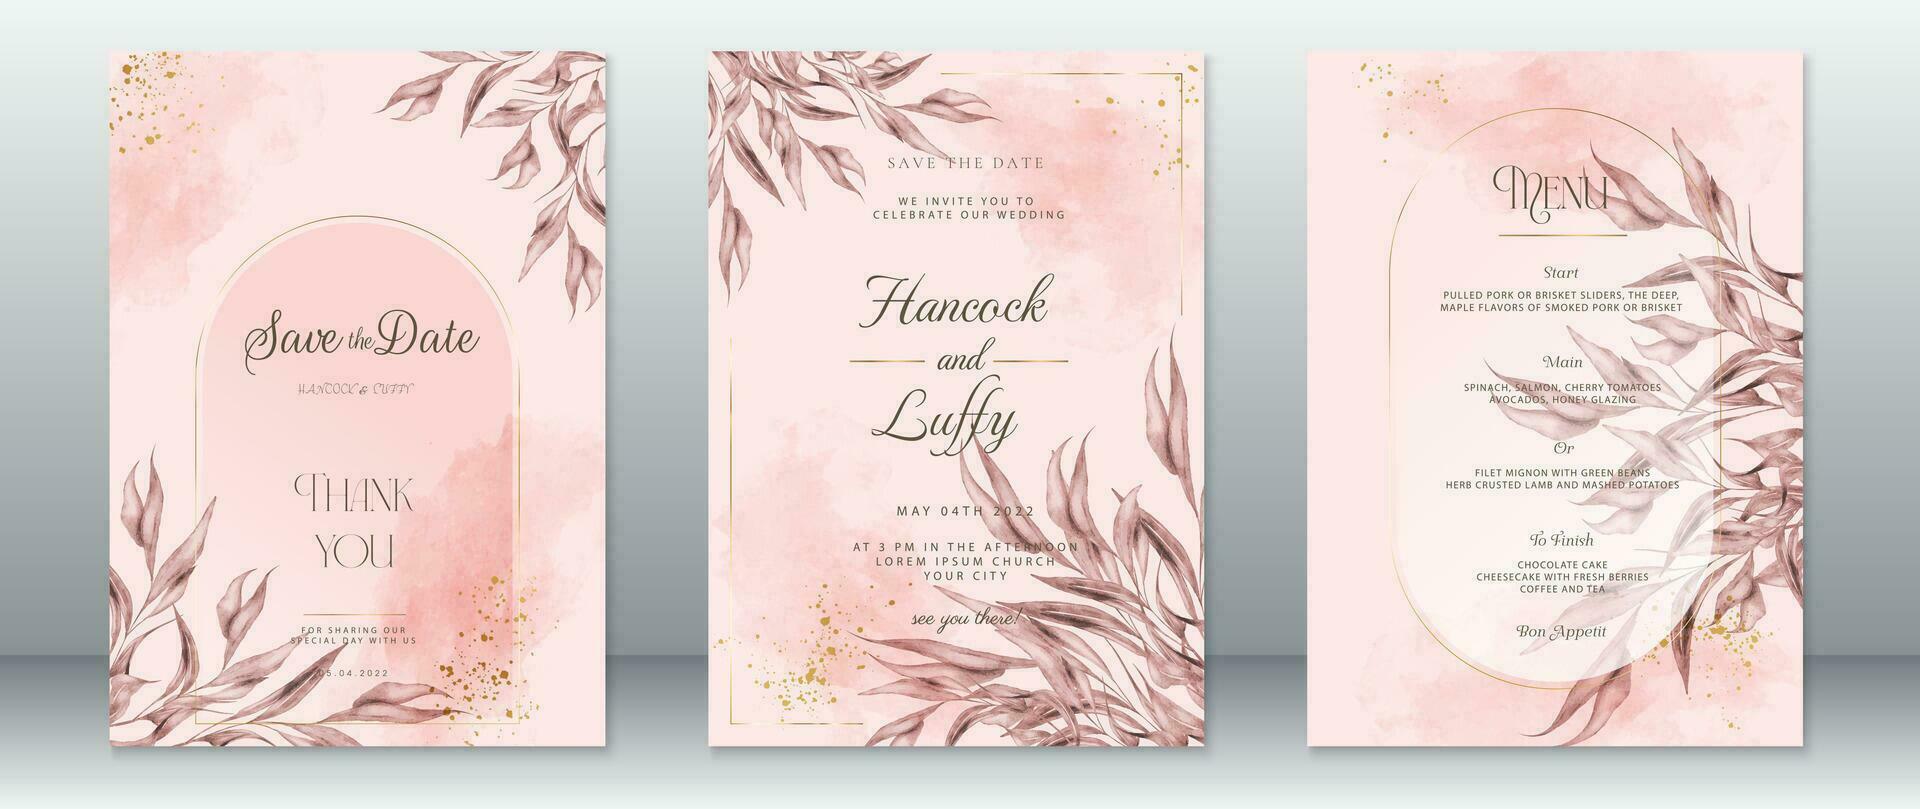 Pink wedding invitation card template nature design vector